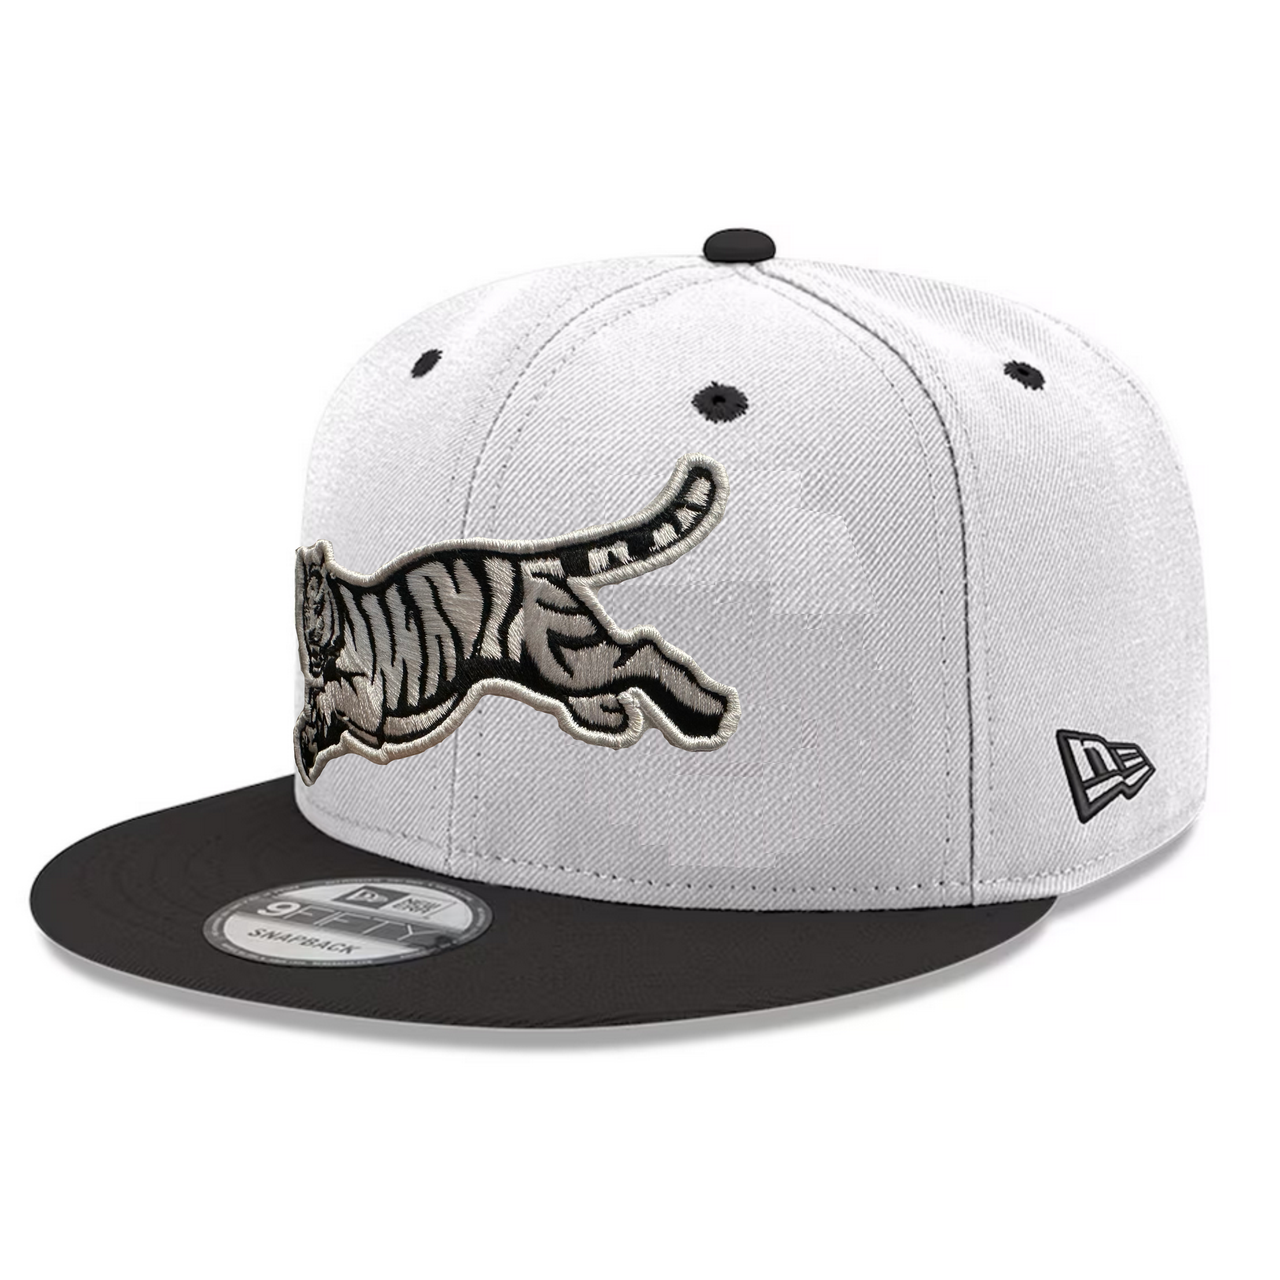 Cincinnati Bengals New Era White/Black Leaping Tiger 9FIFTY Snapback Hat